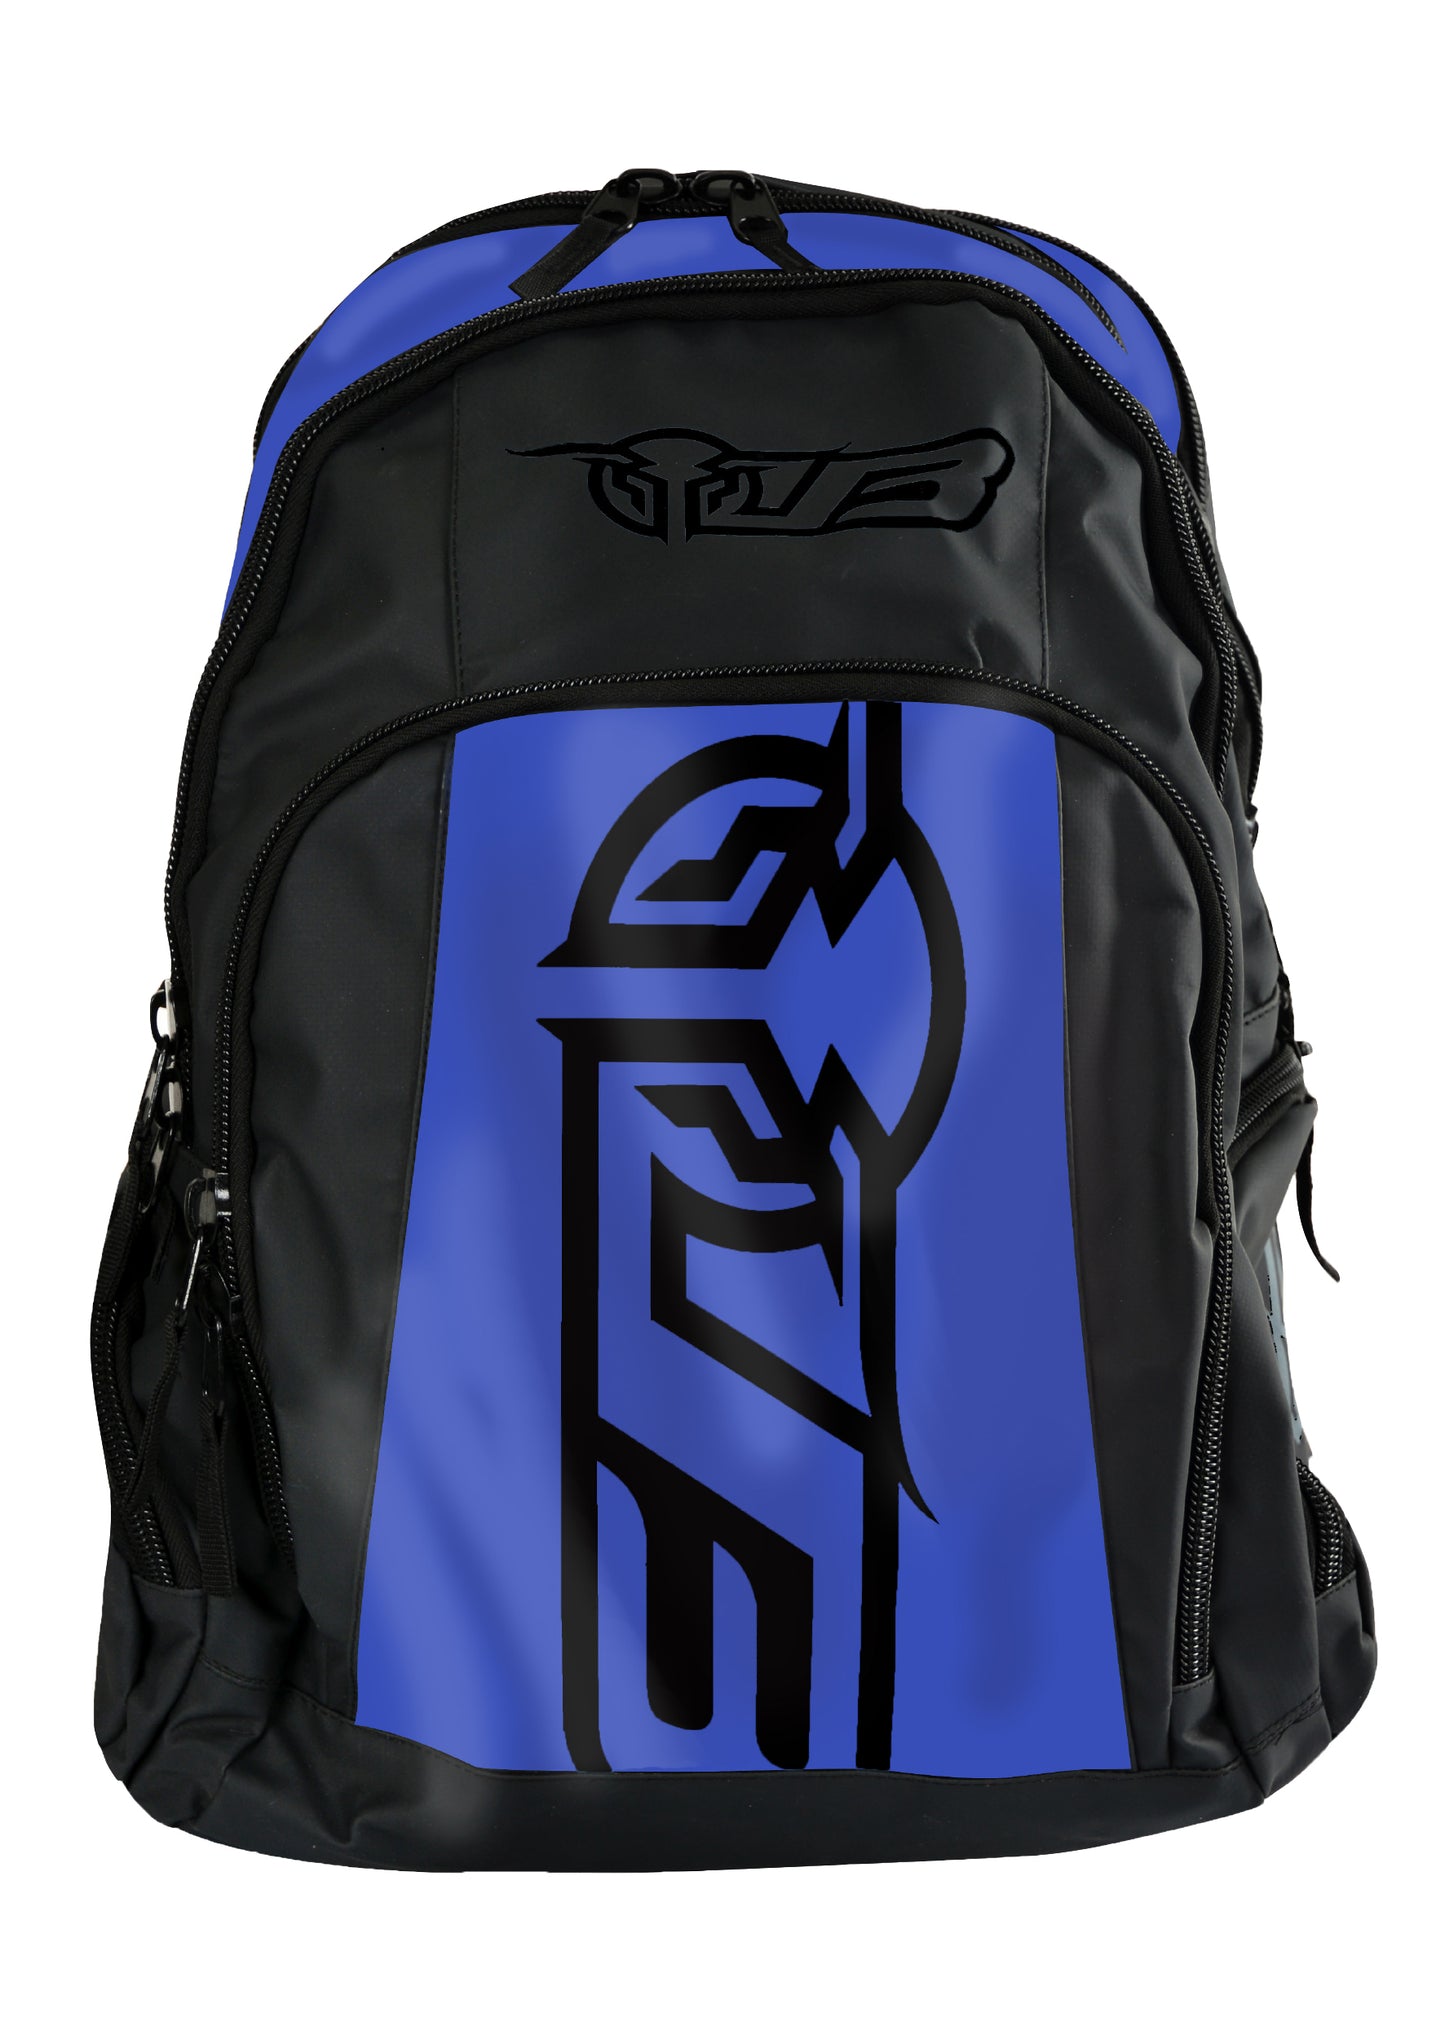 Bullzye Dozer Backpack - Blue/Black - BCP1900BPK